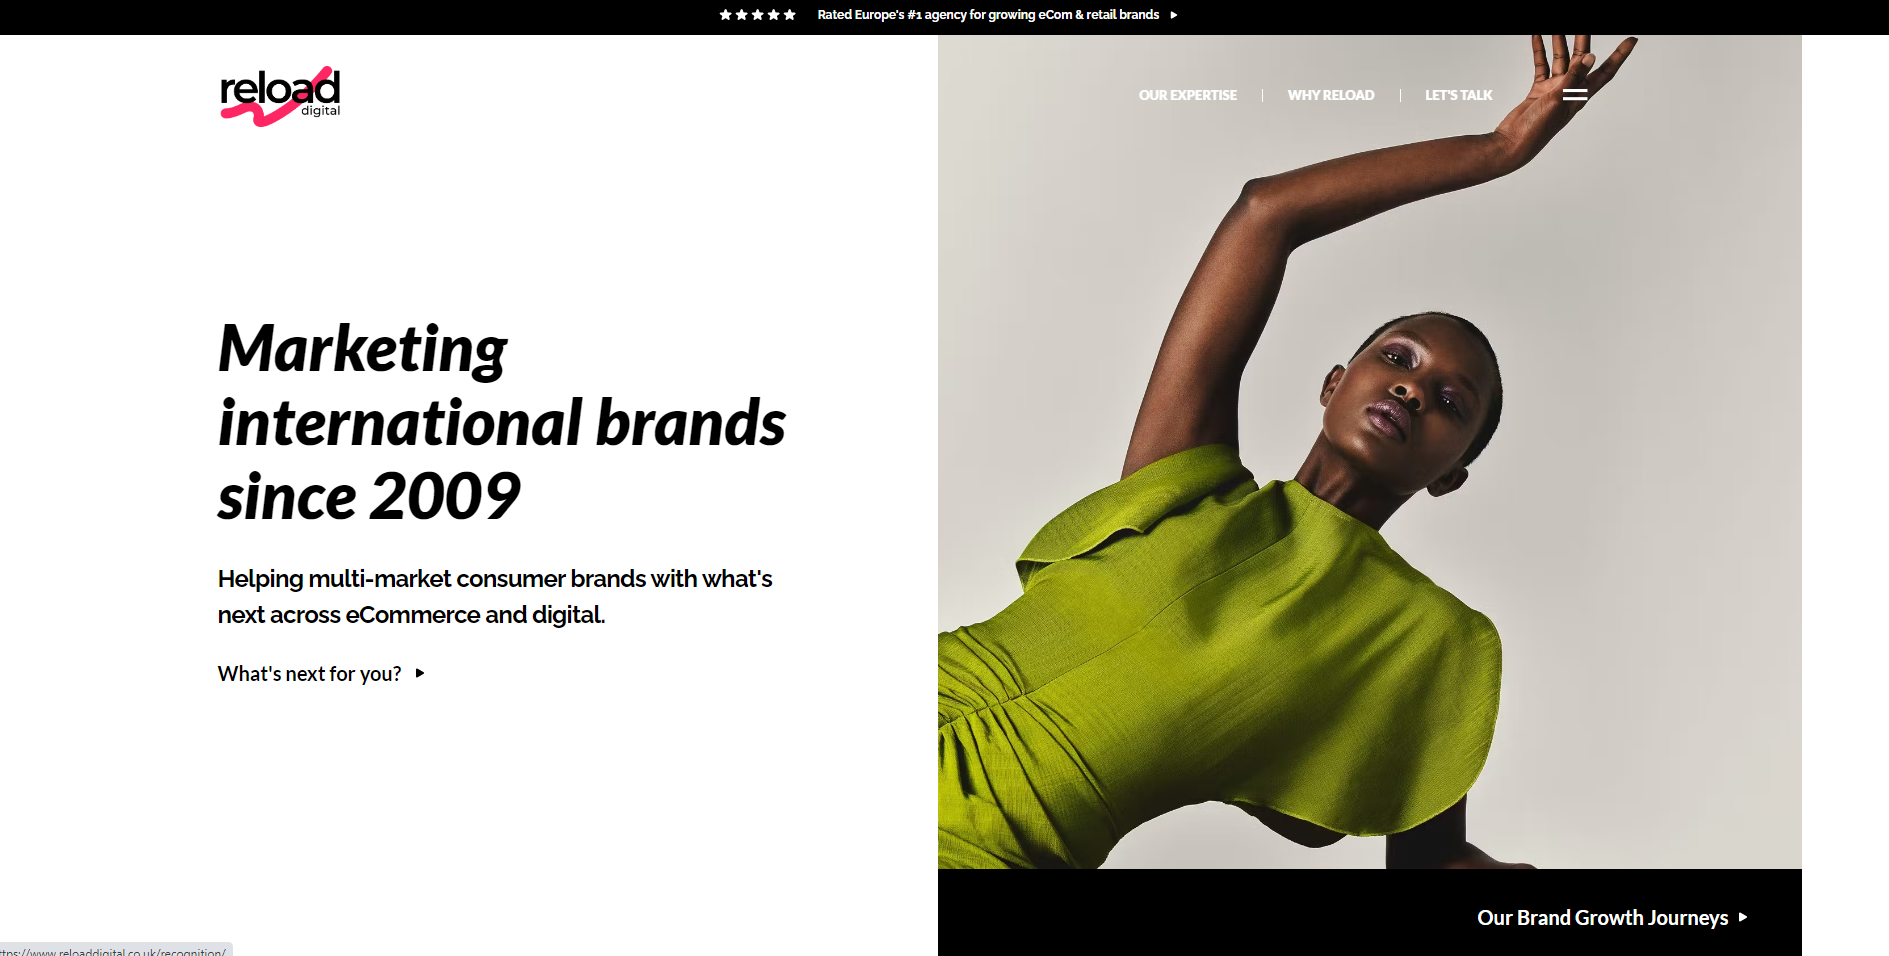 reload digital homepage, marketing international brands since 2009